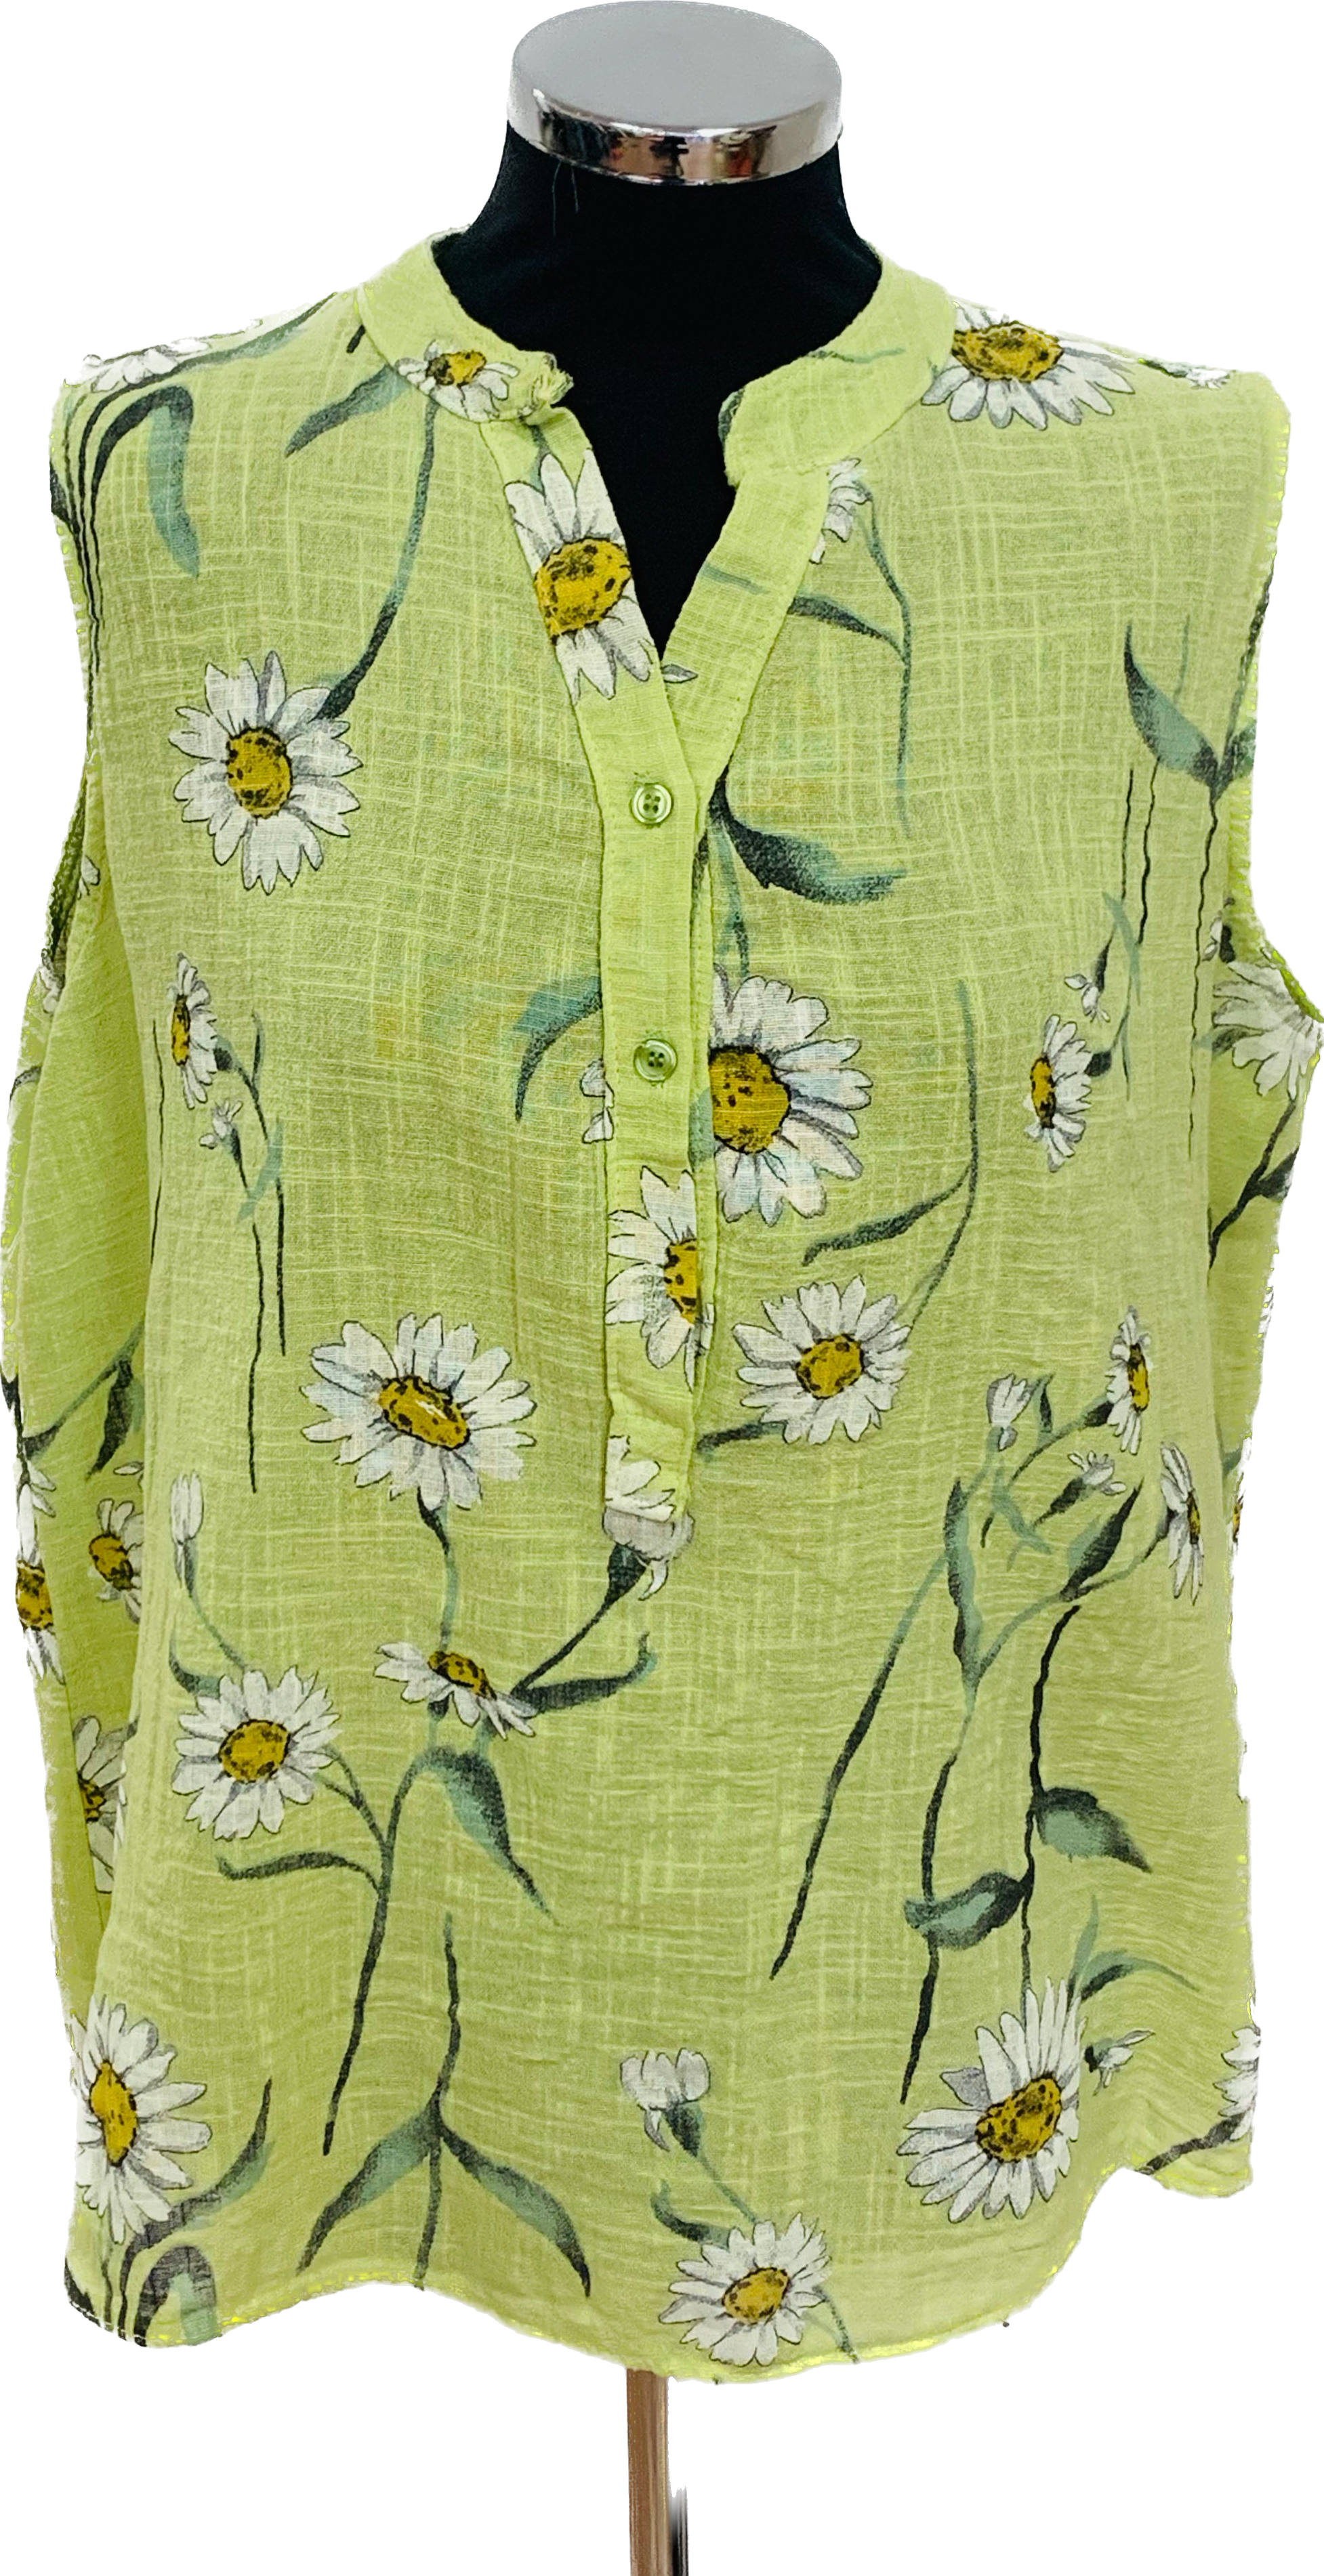 Daisy Design Sleeveless Cotton Top (12-16/18)